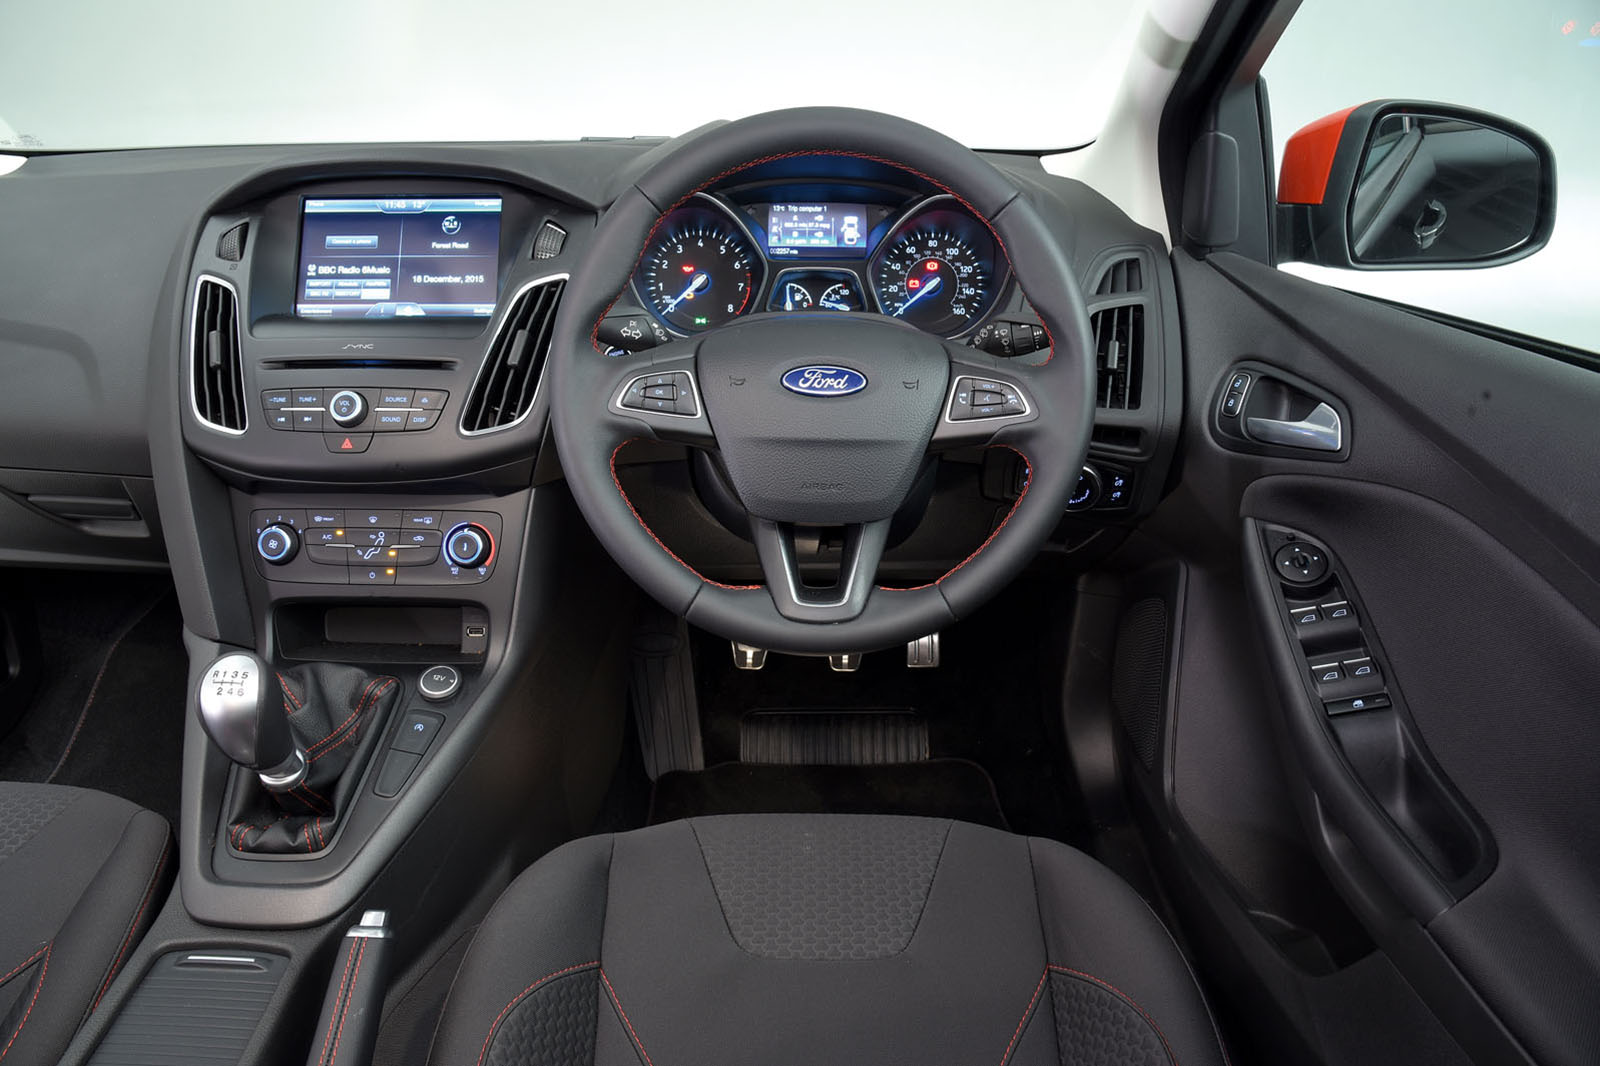 Ford Focus [MK3] [C346] (2014 - 2017) used car review, Car review